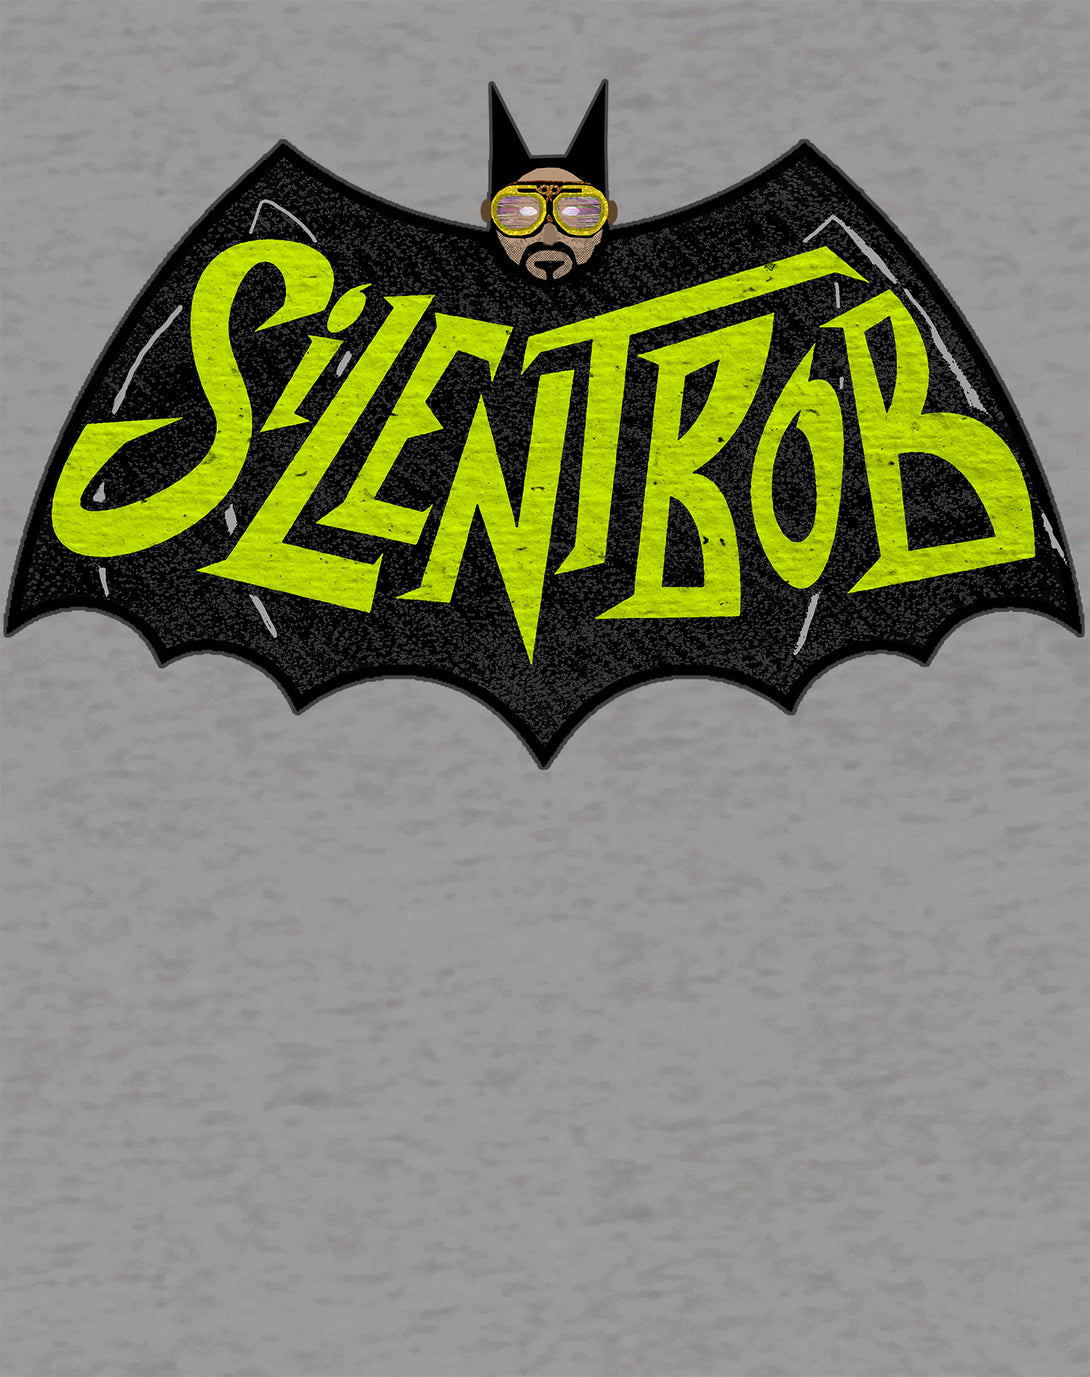 Kevin Smith View Askewniverse Logo Silent Bat Bob Official Women's T-Shirt Sports Grey - Urban Species Design Close Up